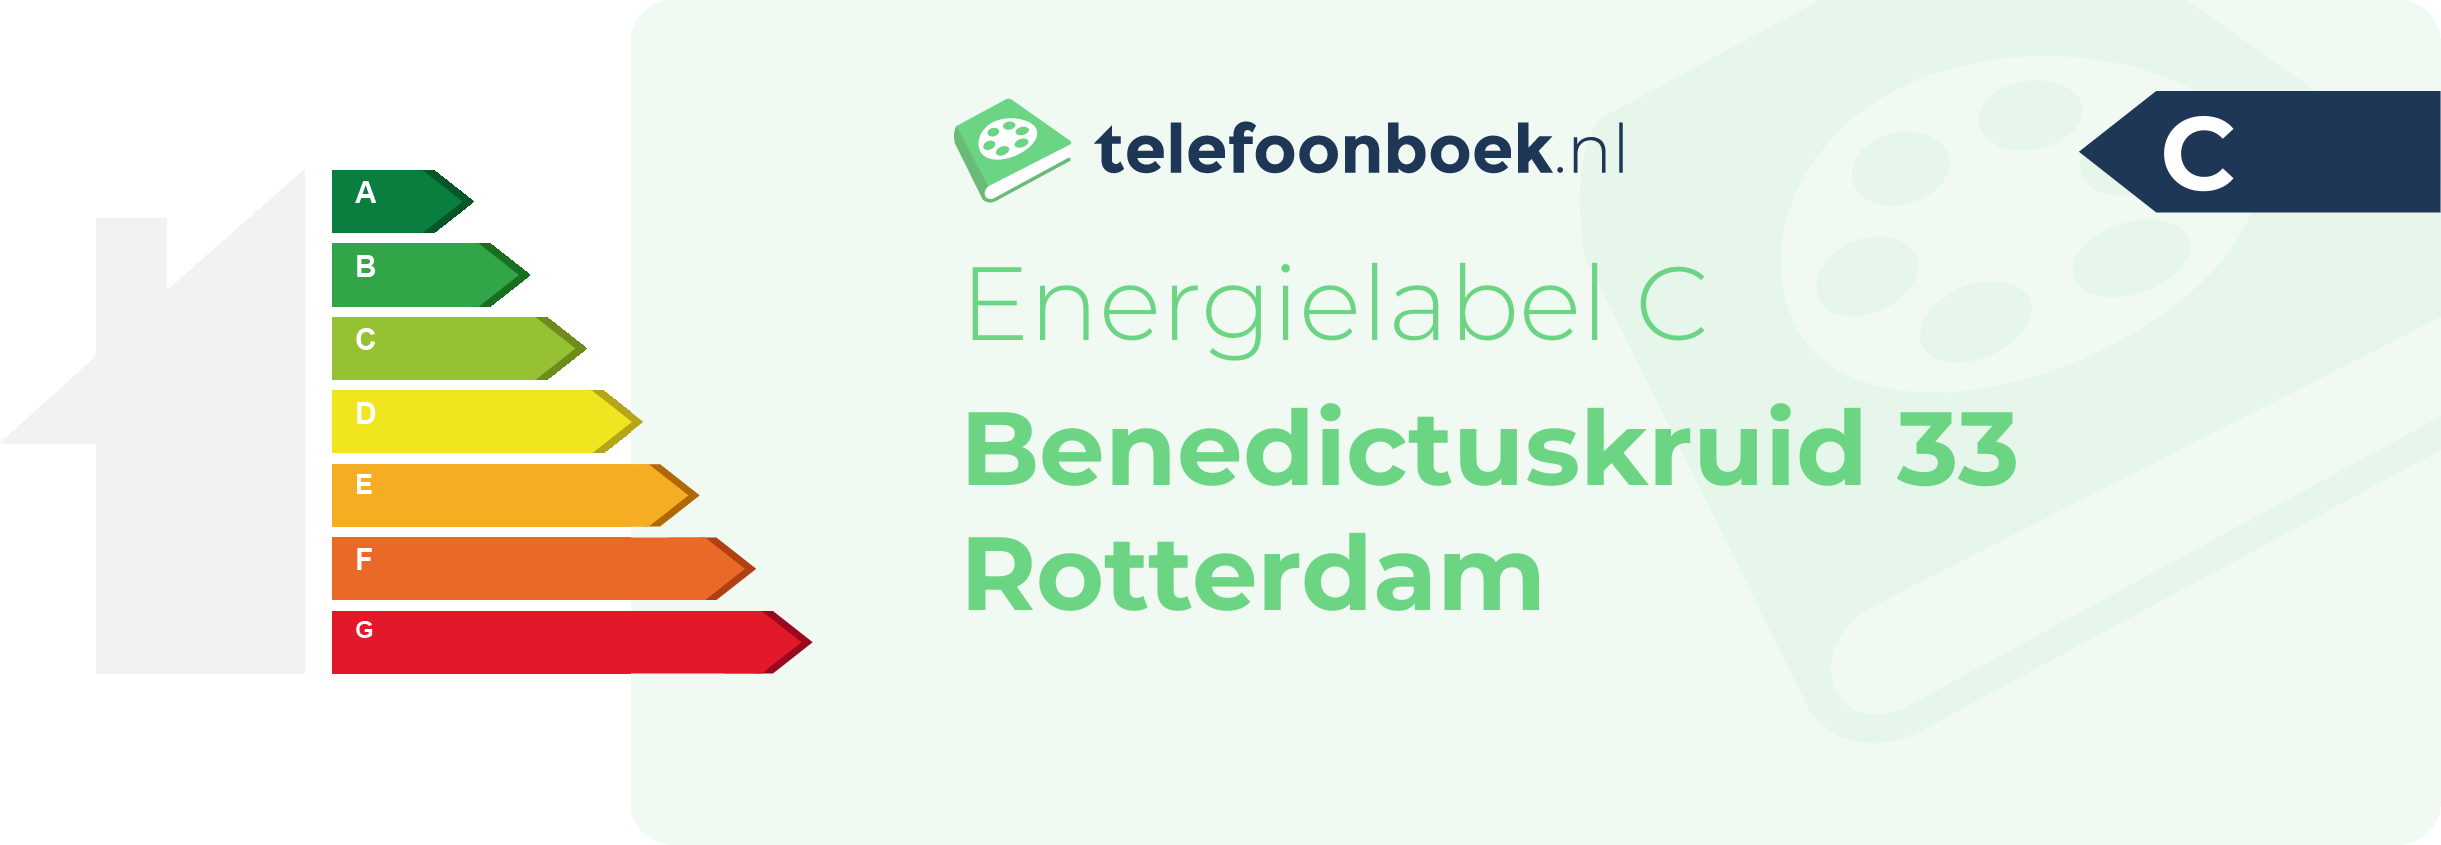 Energielabel Benedictuskruid 33 Rotterdam